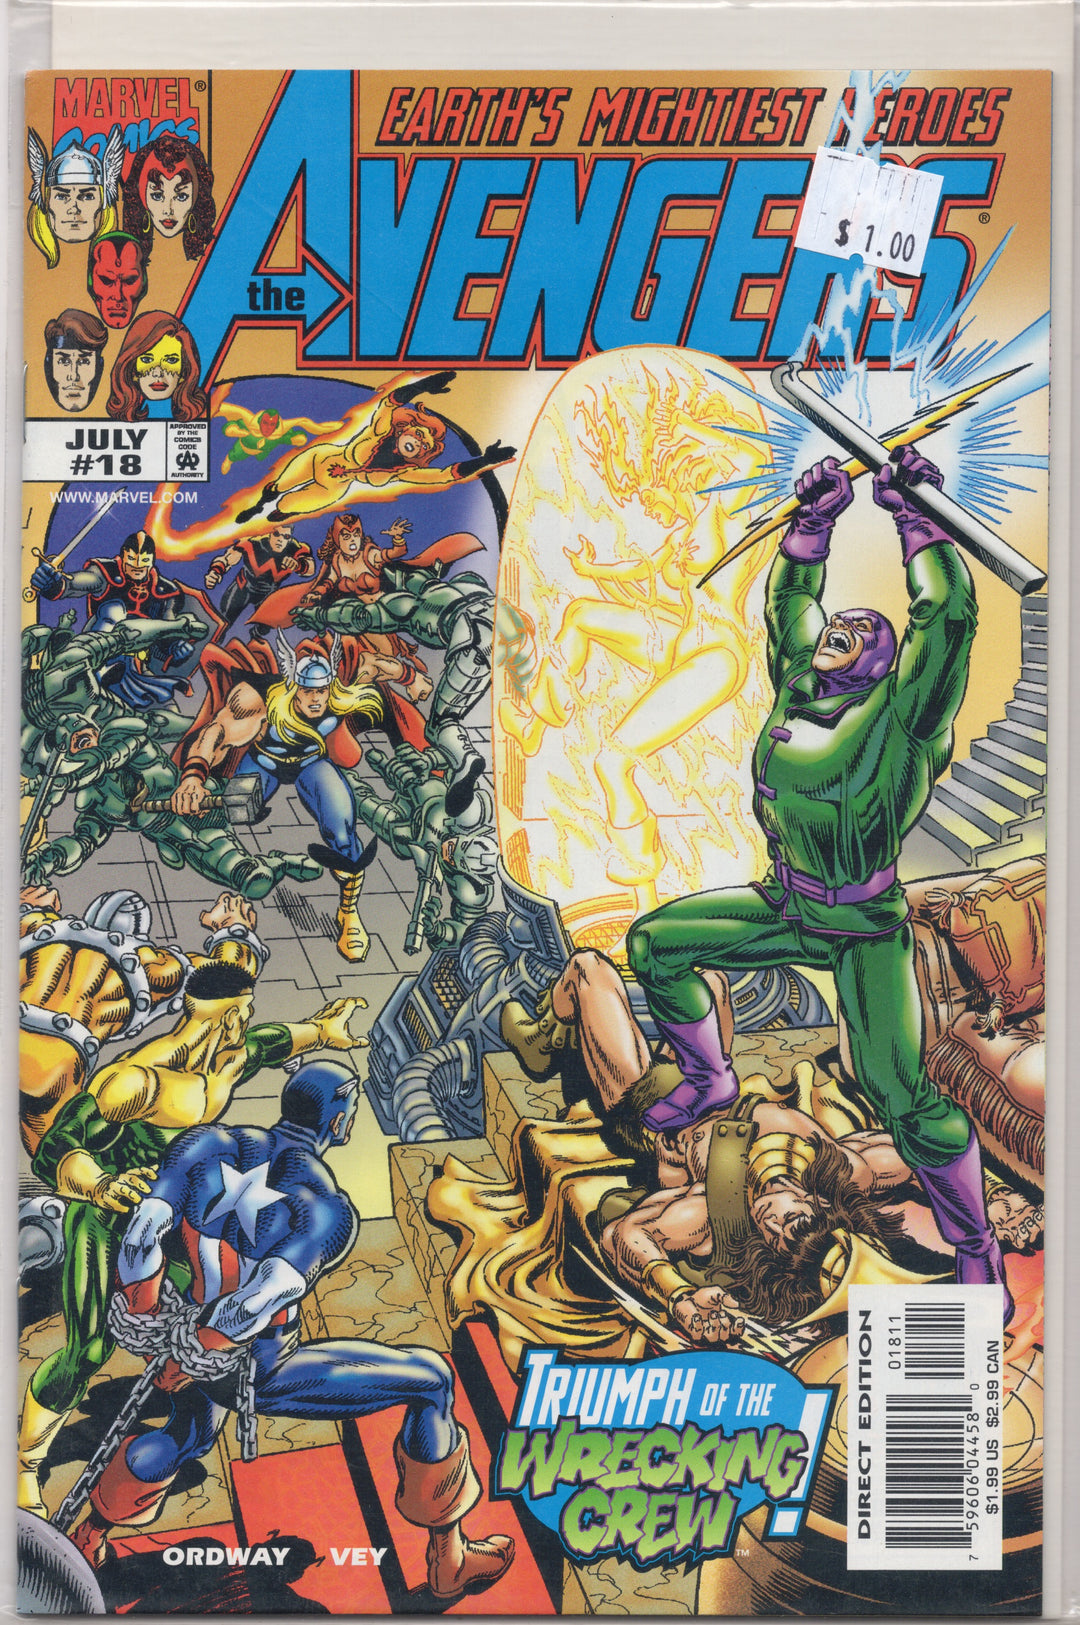 The Avengers : Earths Mightiest Heroes #18